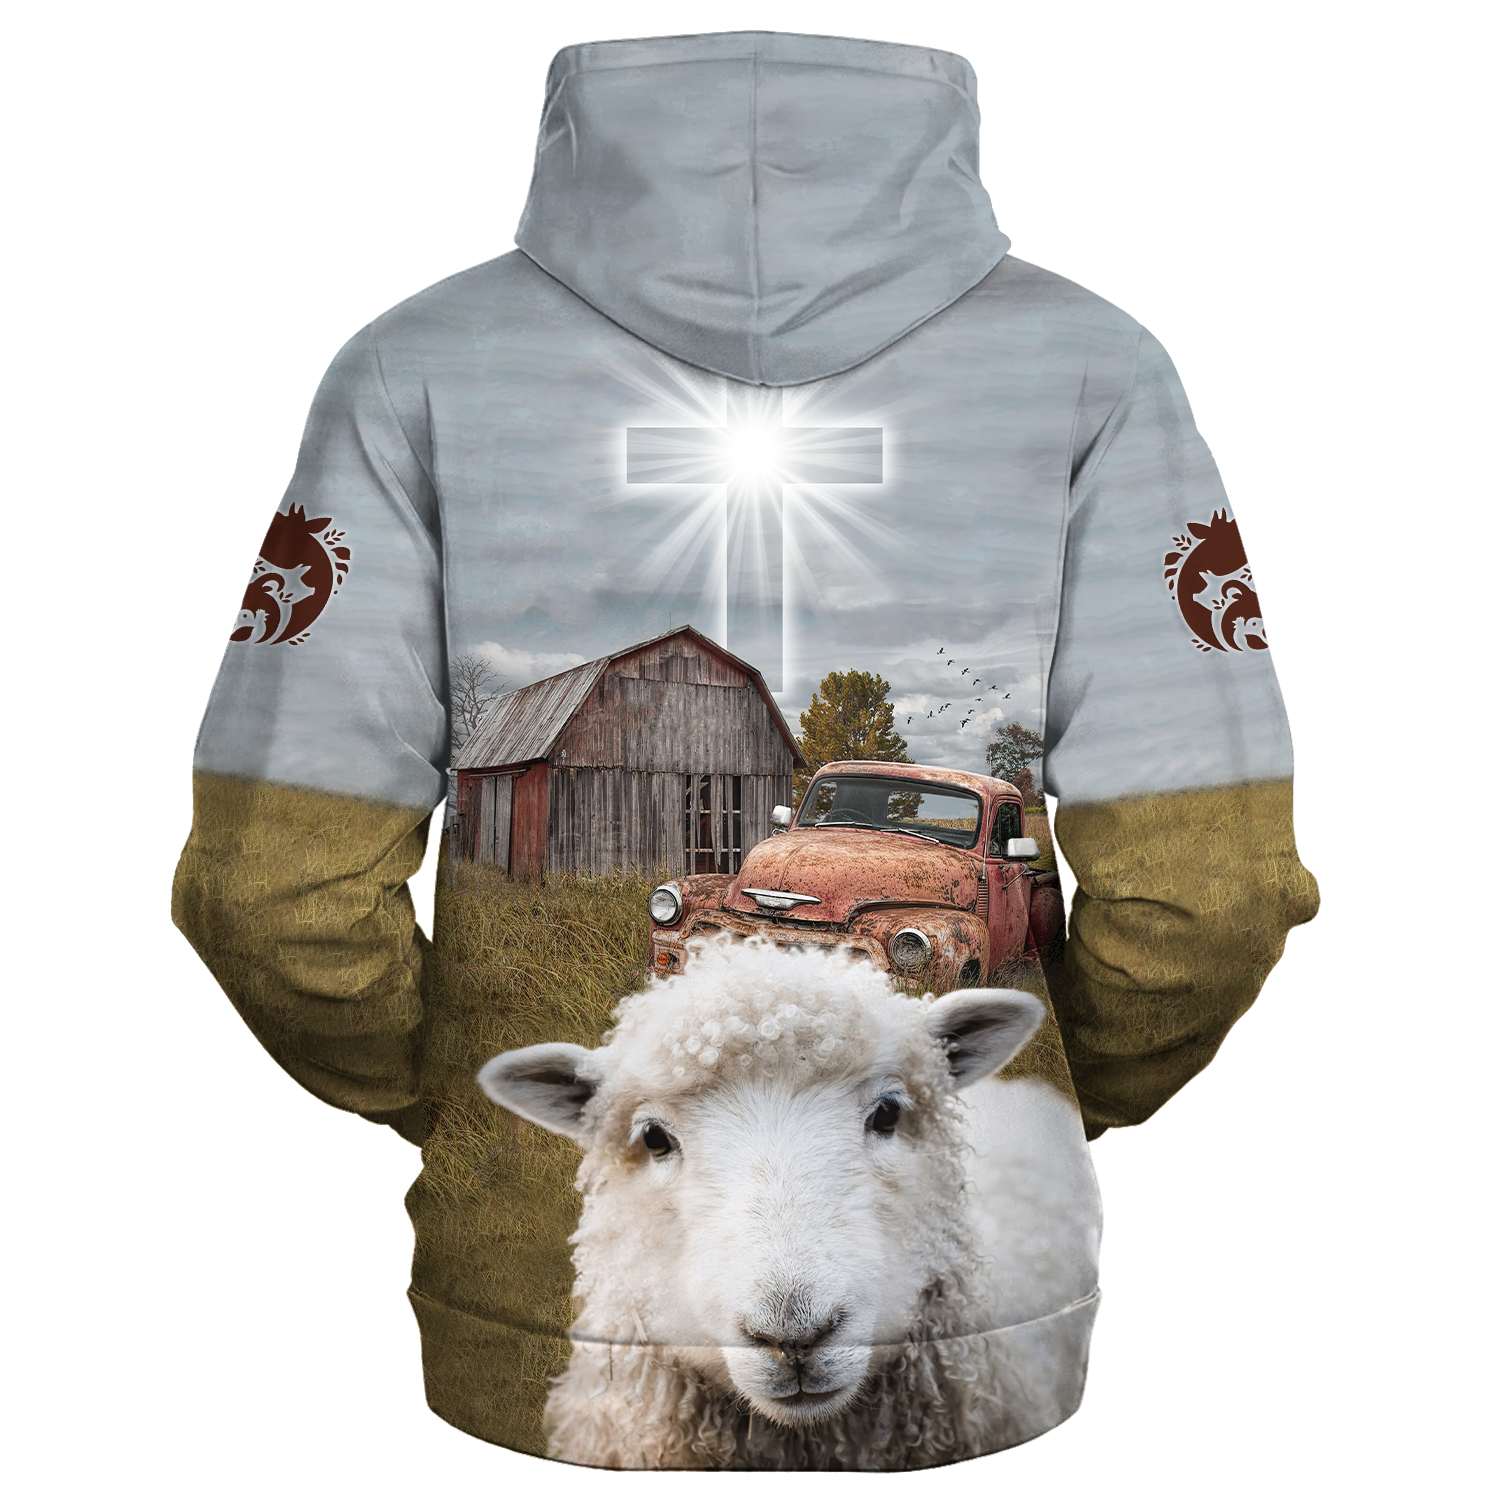 3D All Over Print Sheep Hoodie/ So God Made A Farmer Hoodies